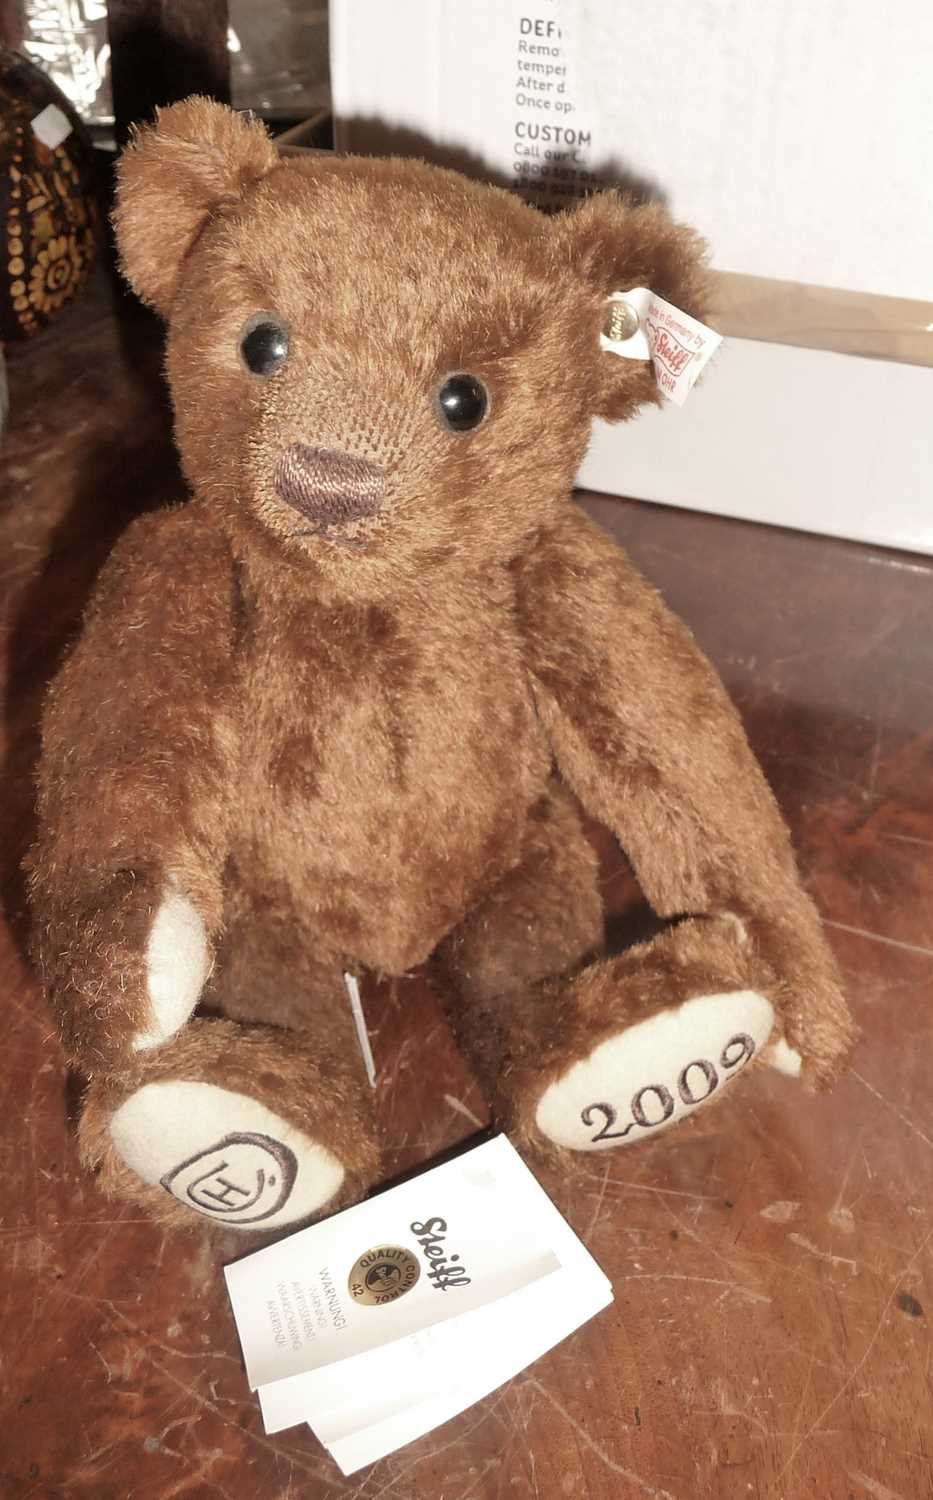 2009 Steiff Hotel Chocolat teddy bear called George, limited edition - Image 3 of 4